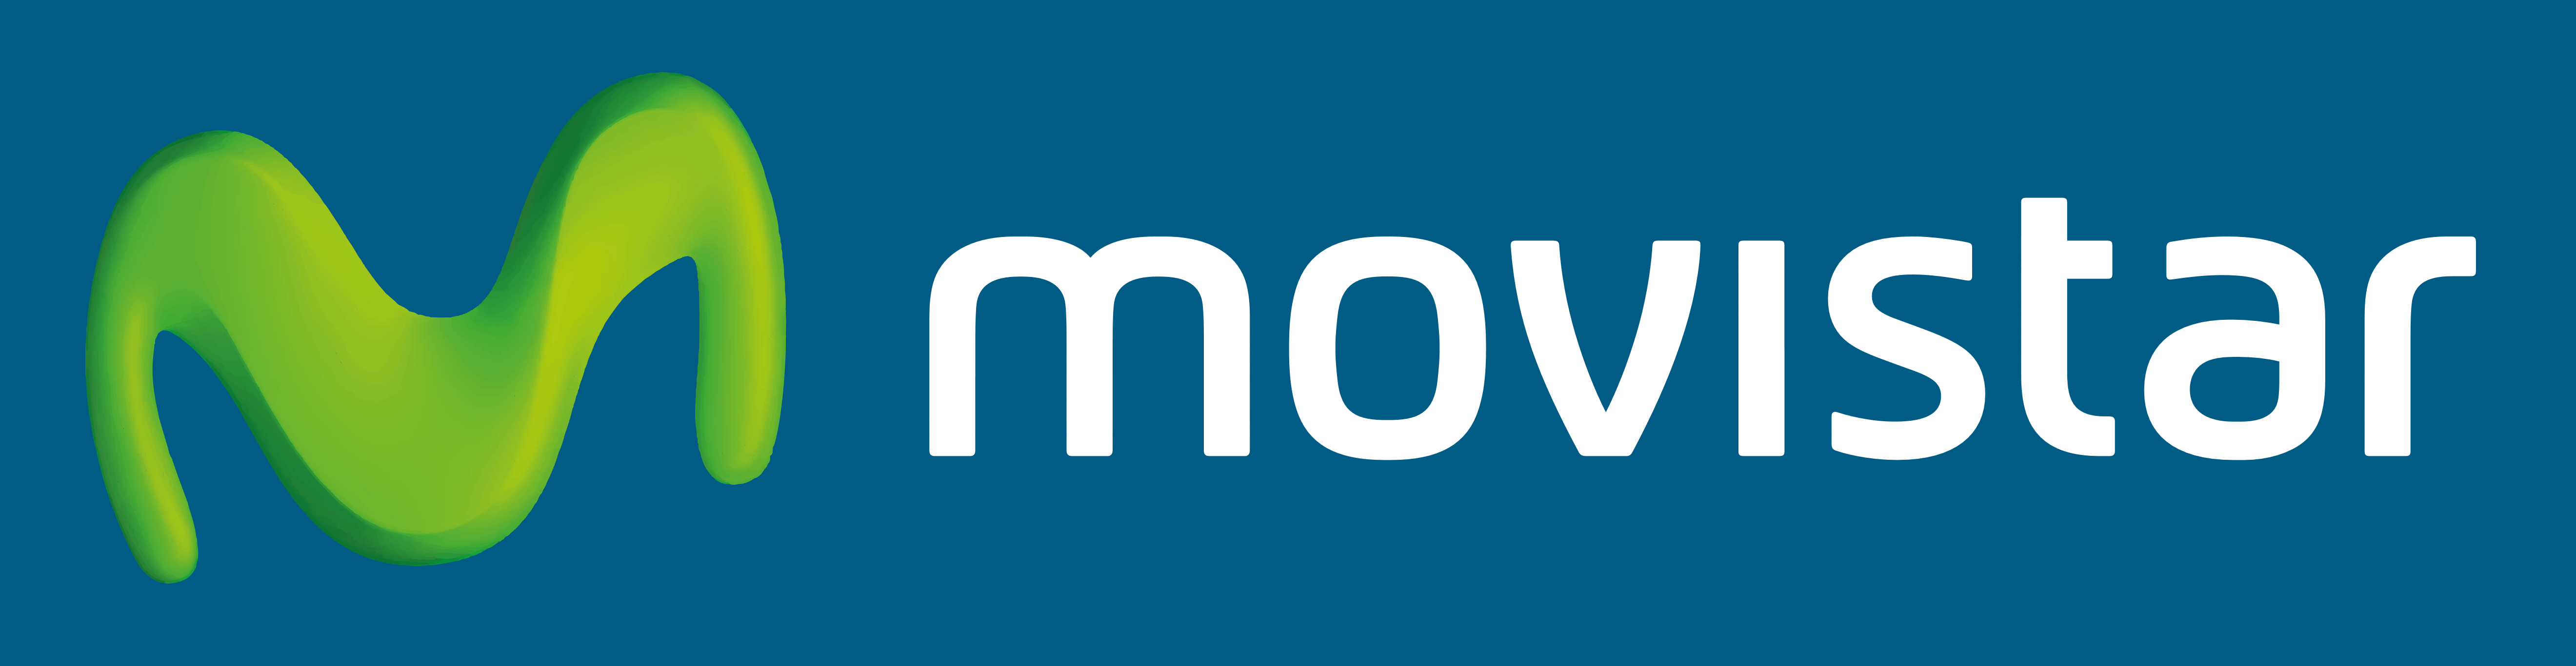 Movistar – Logos Download